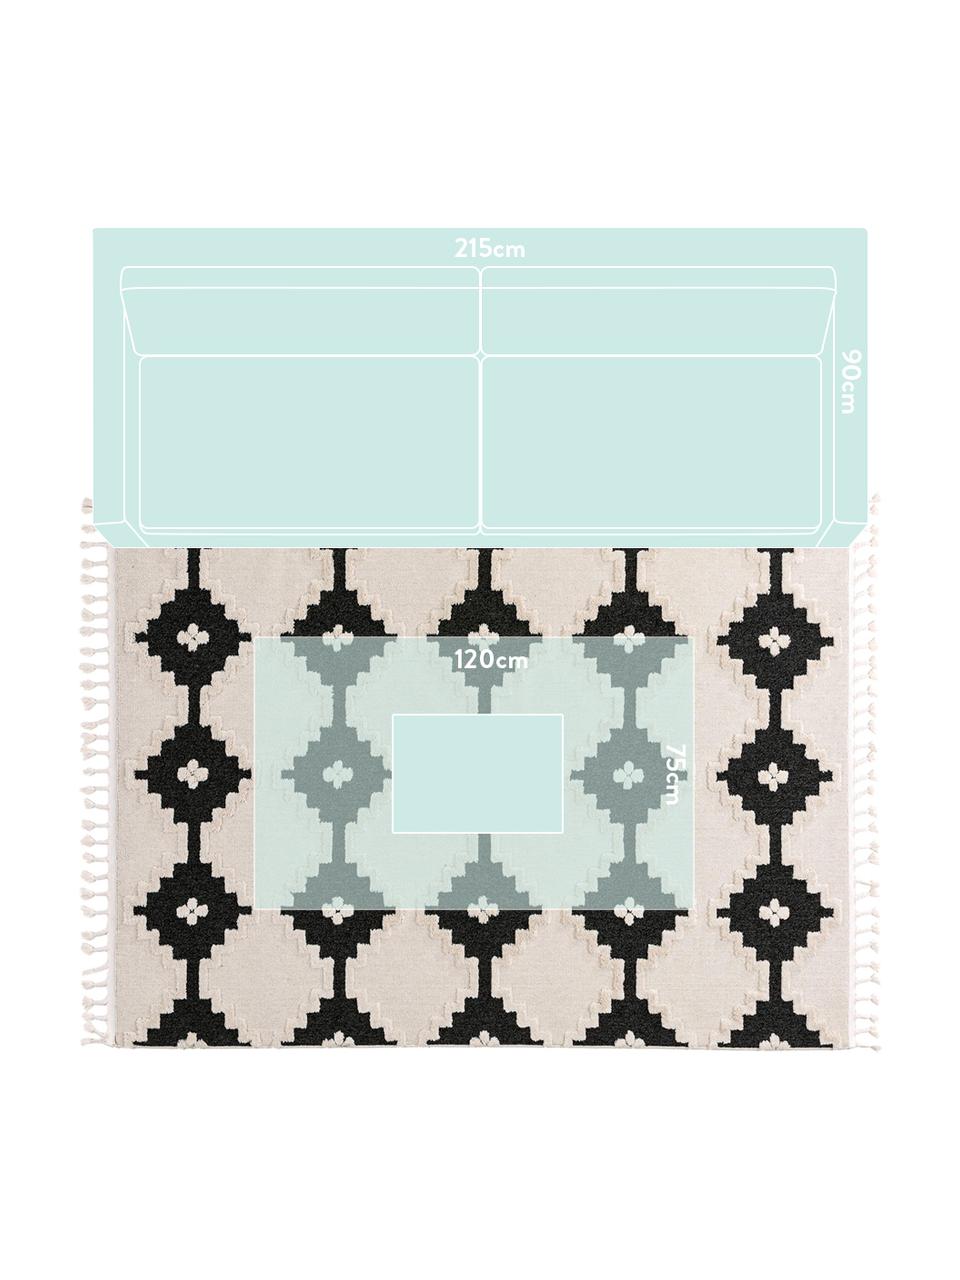 Teppich Oyo Square mit Hoch-Tiefmuster im Boho Stil, Flor: Polyester, Creme, Anthrazit, B 200 x L 290 cm (Größe L)